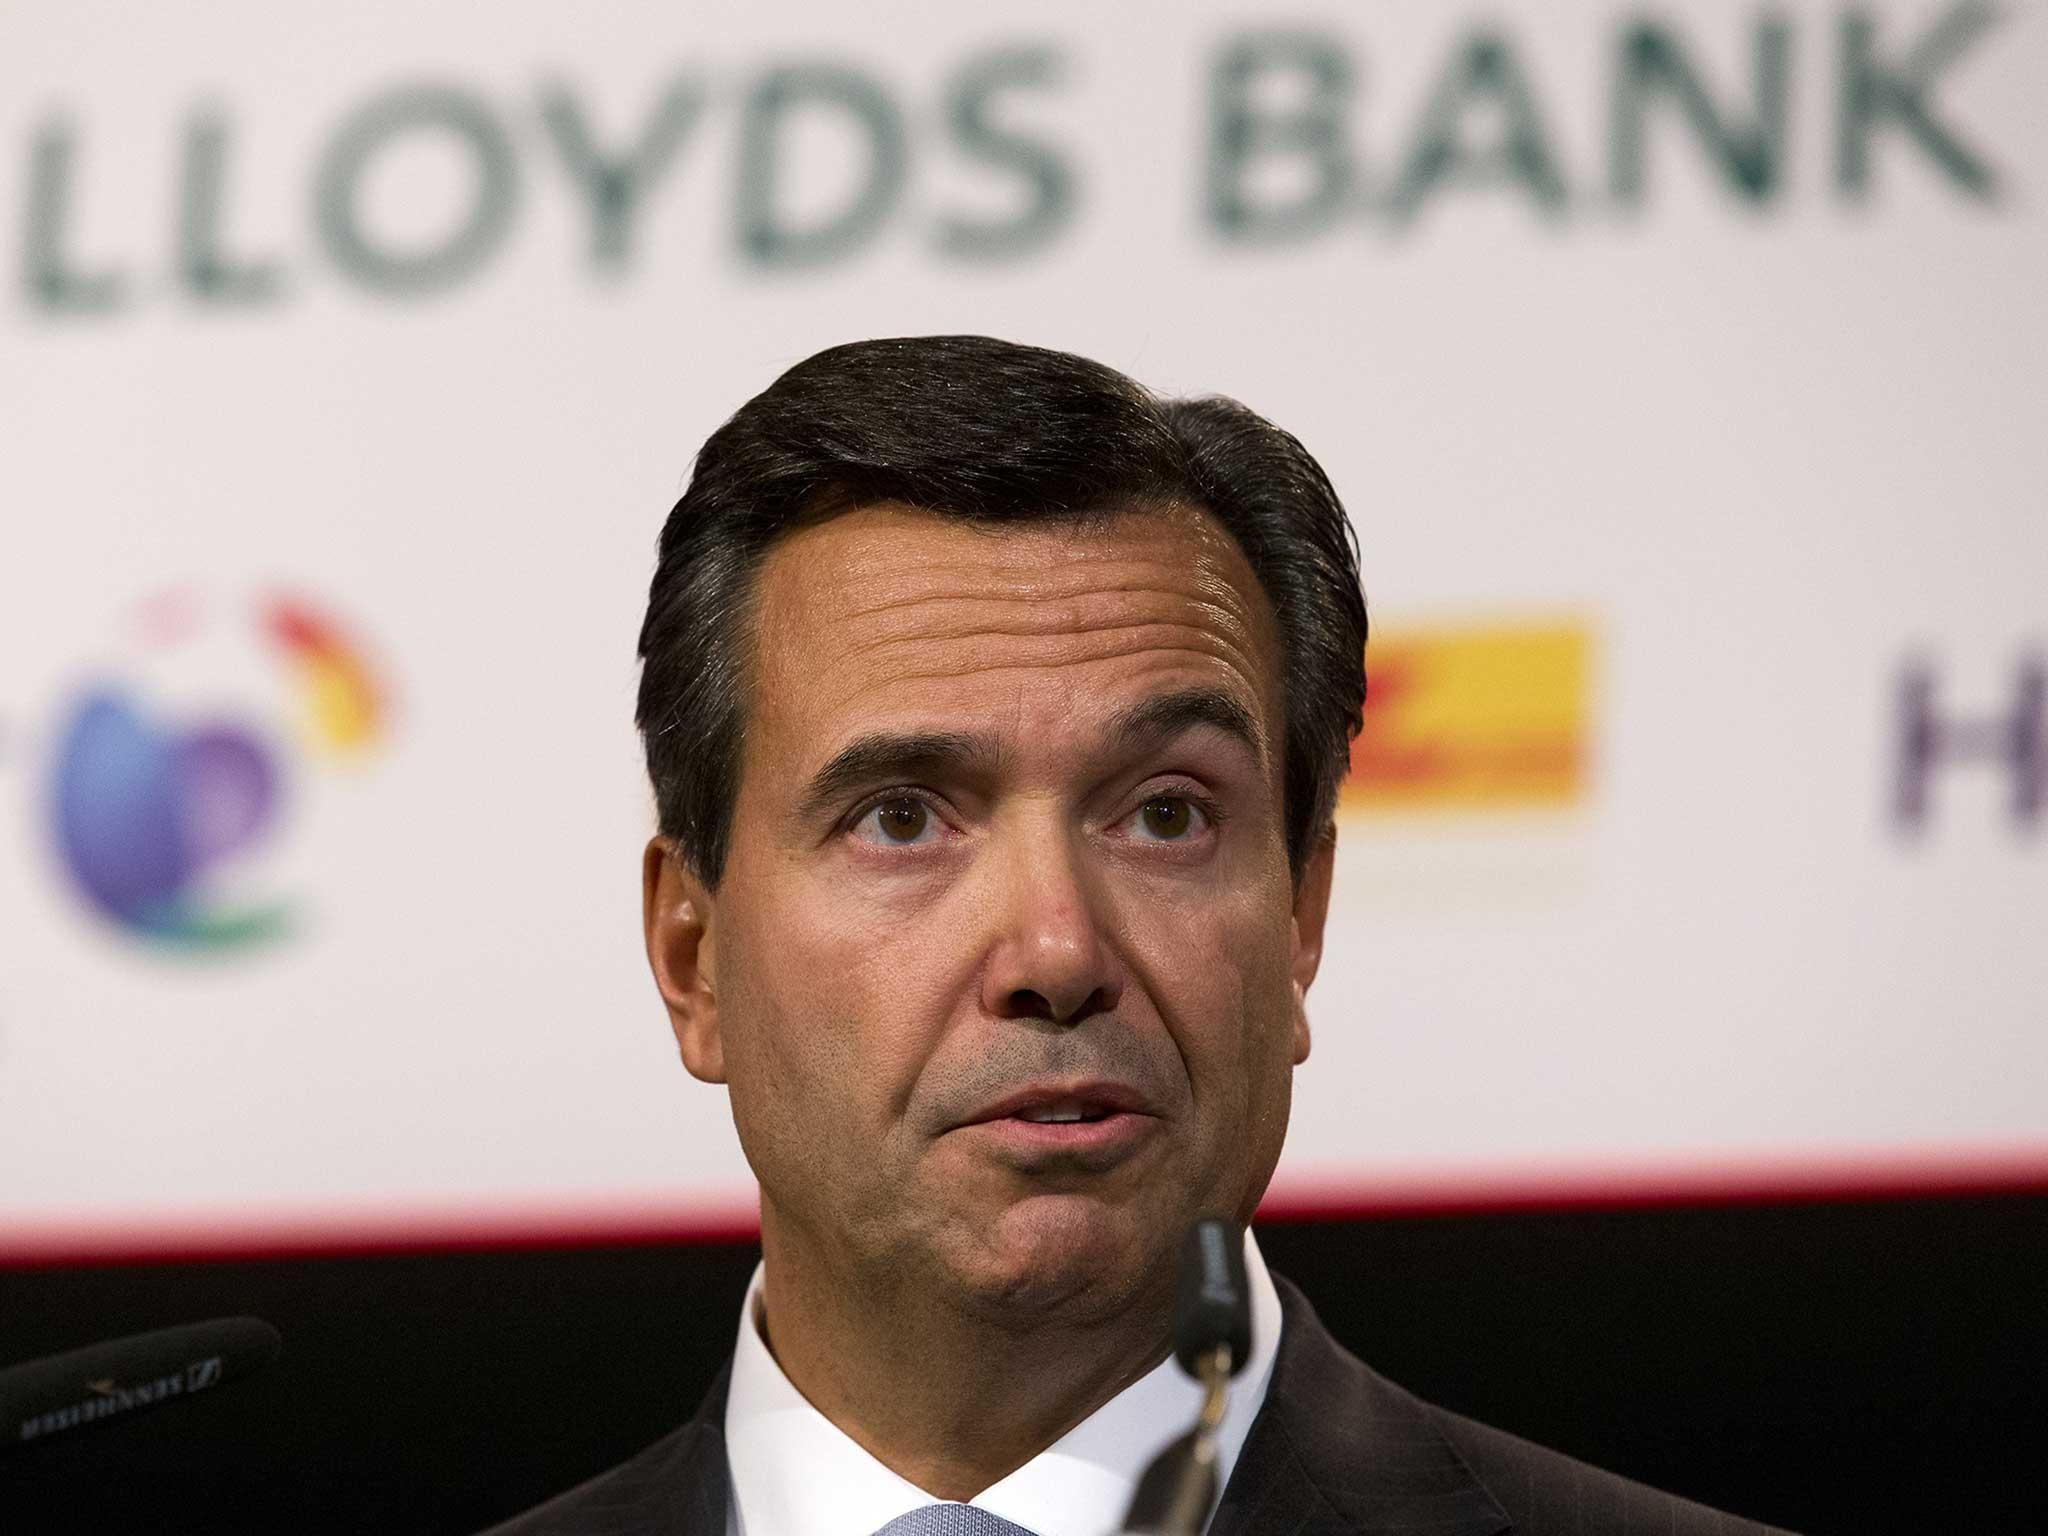 Lloyds Banking Group chief executive Antonio Horta-Osorio